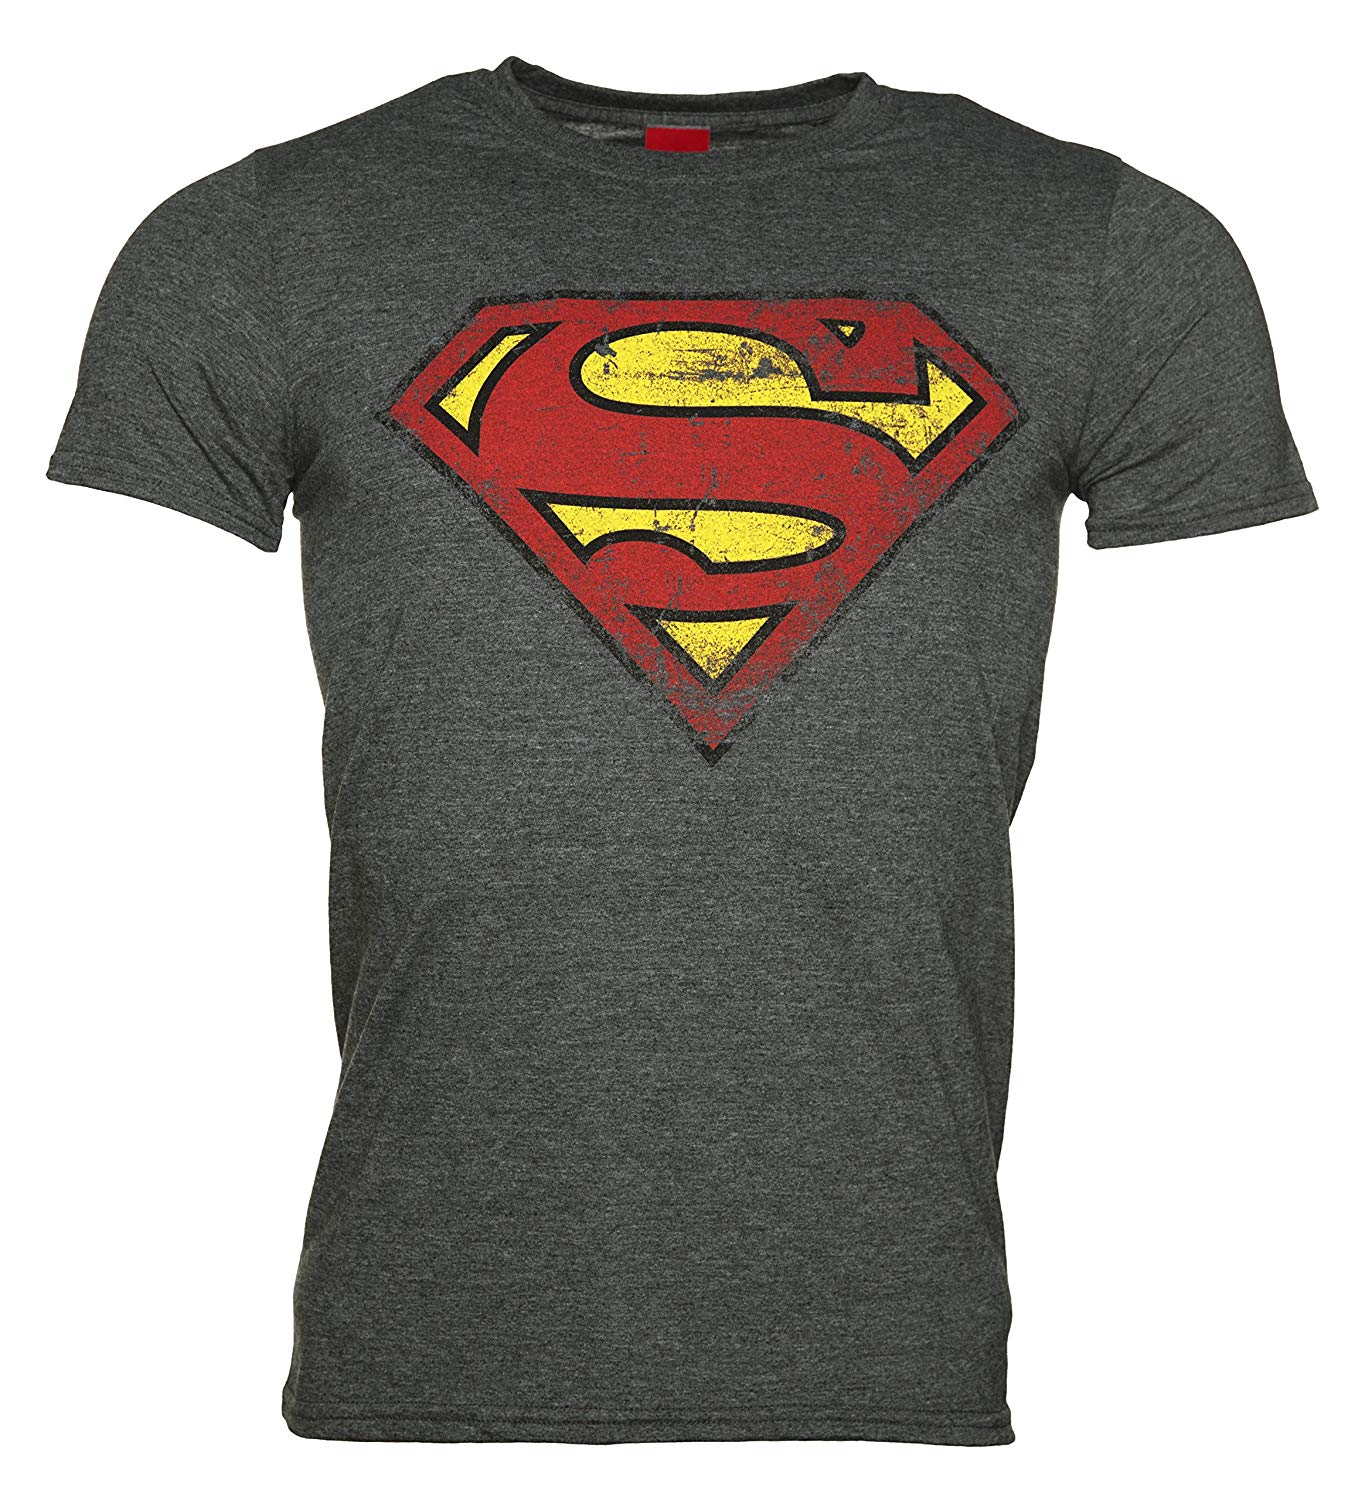 Distressed Superman Logo - Amazon.com: Mens Charcoal Distressed Superman Logo T Shirt ...